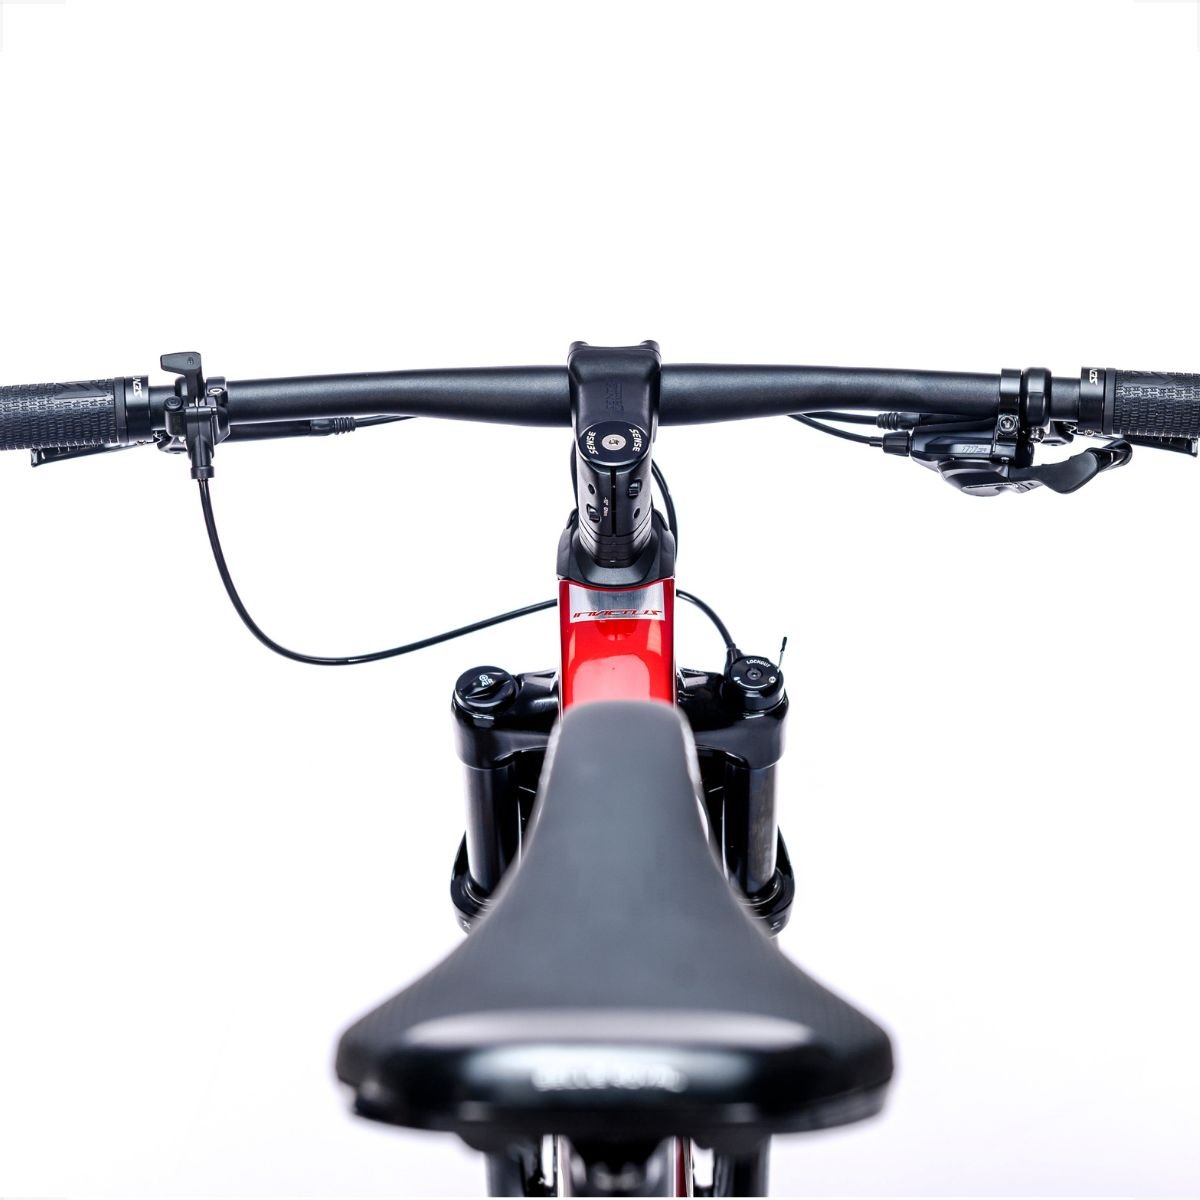 Bicicleta Full Sense Invictus Sport Carbono Shimano Cues:vermelho+preto/15 - 6